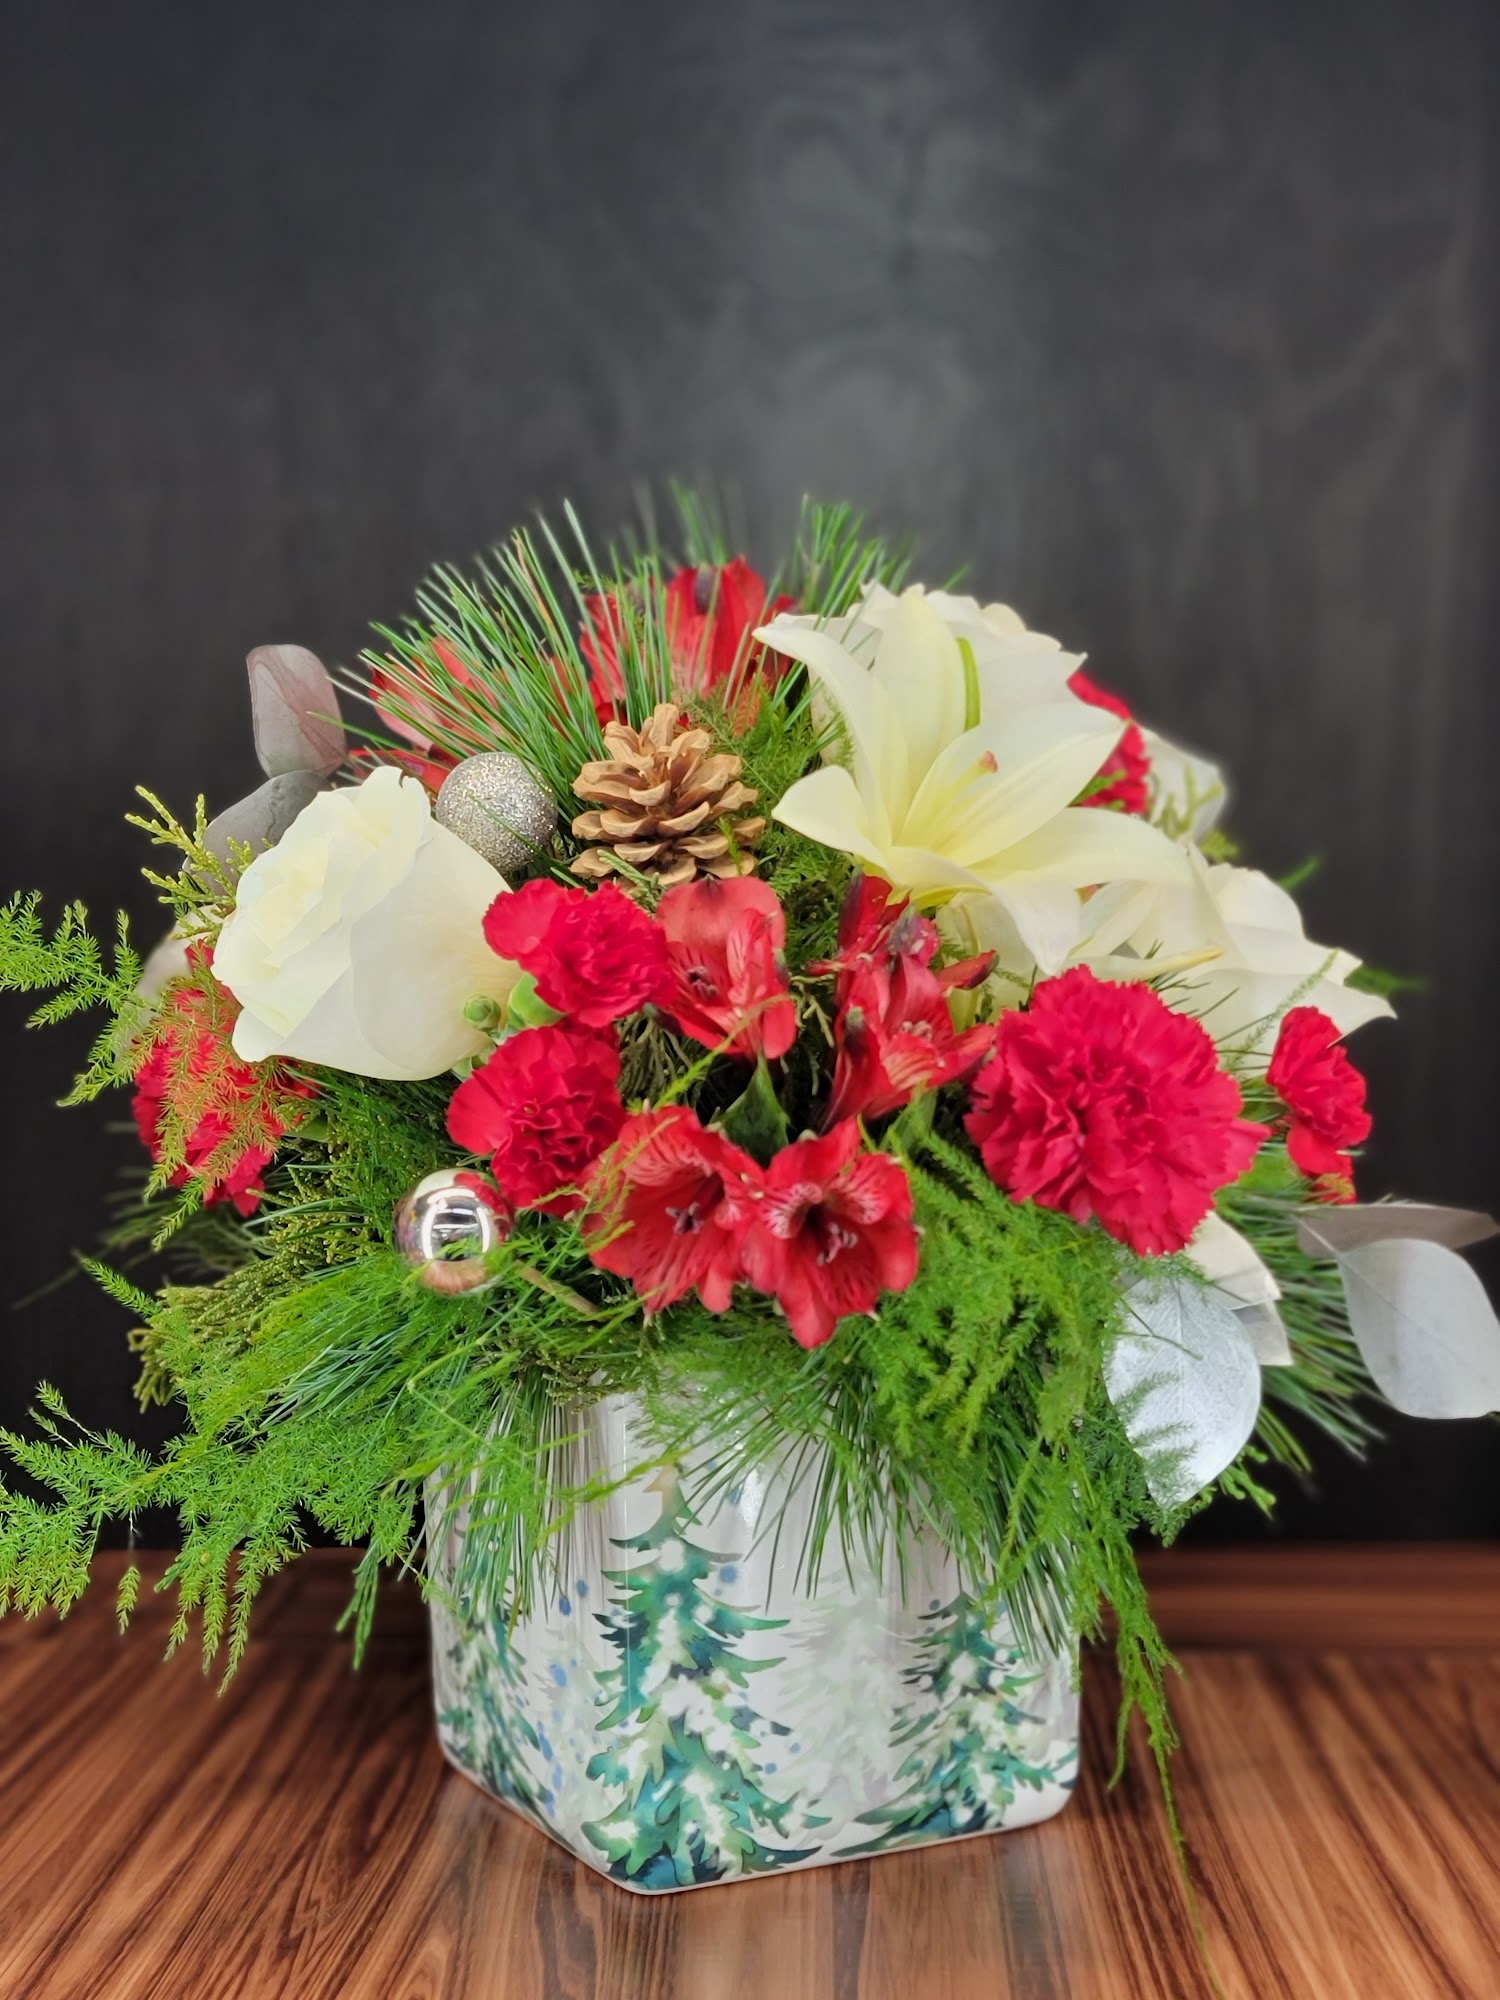 Jan-L's Floral & Gifts 809 S Elm St, Coffeyville Kansas 67337